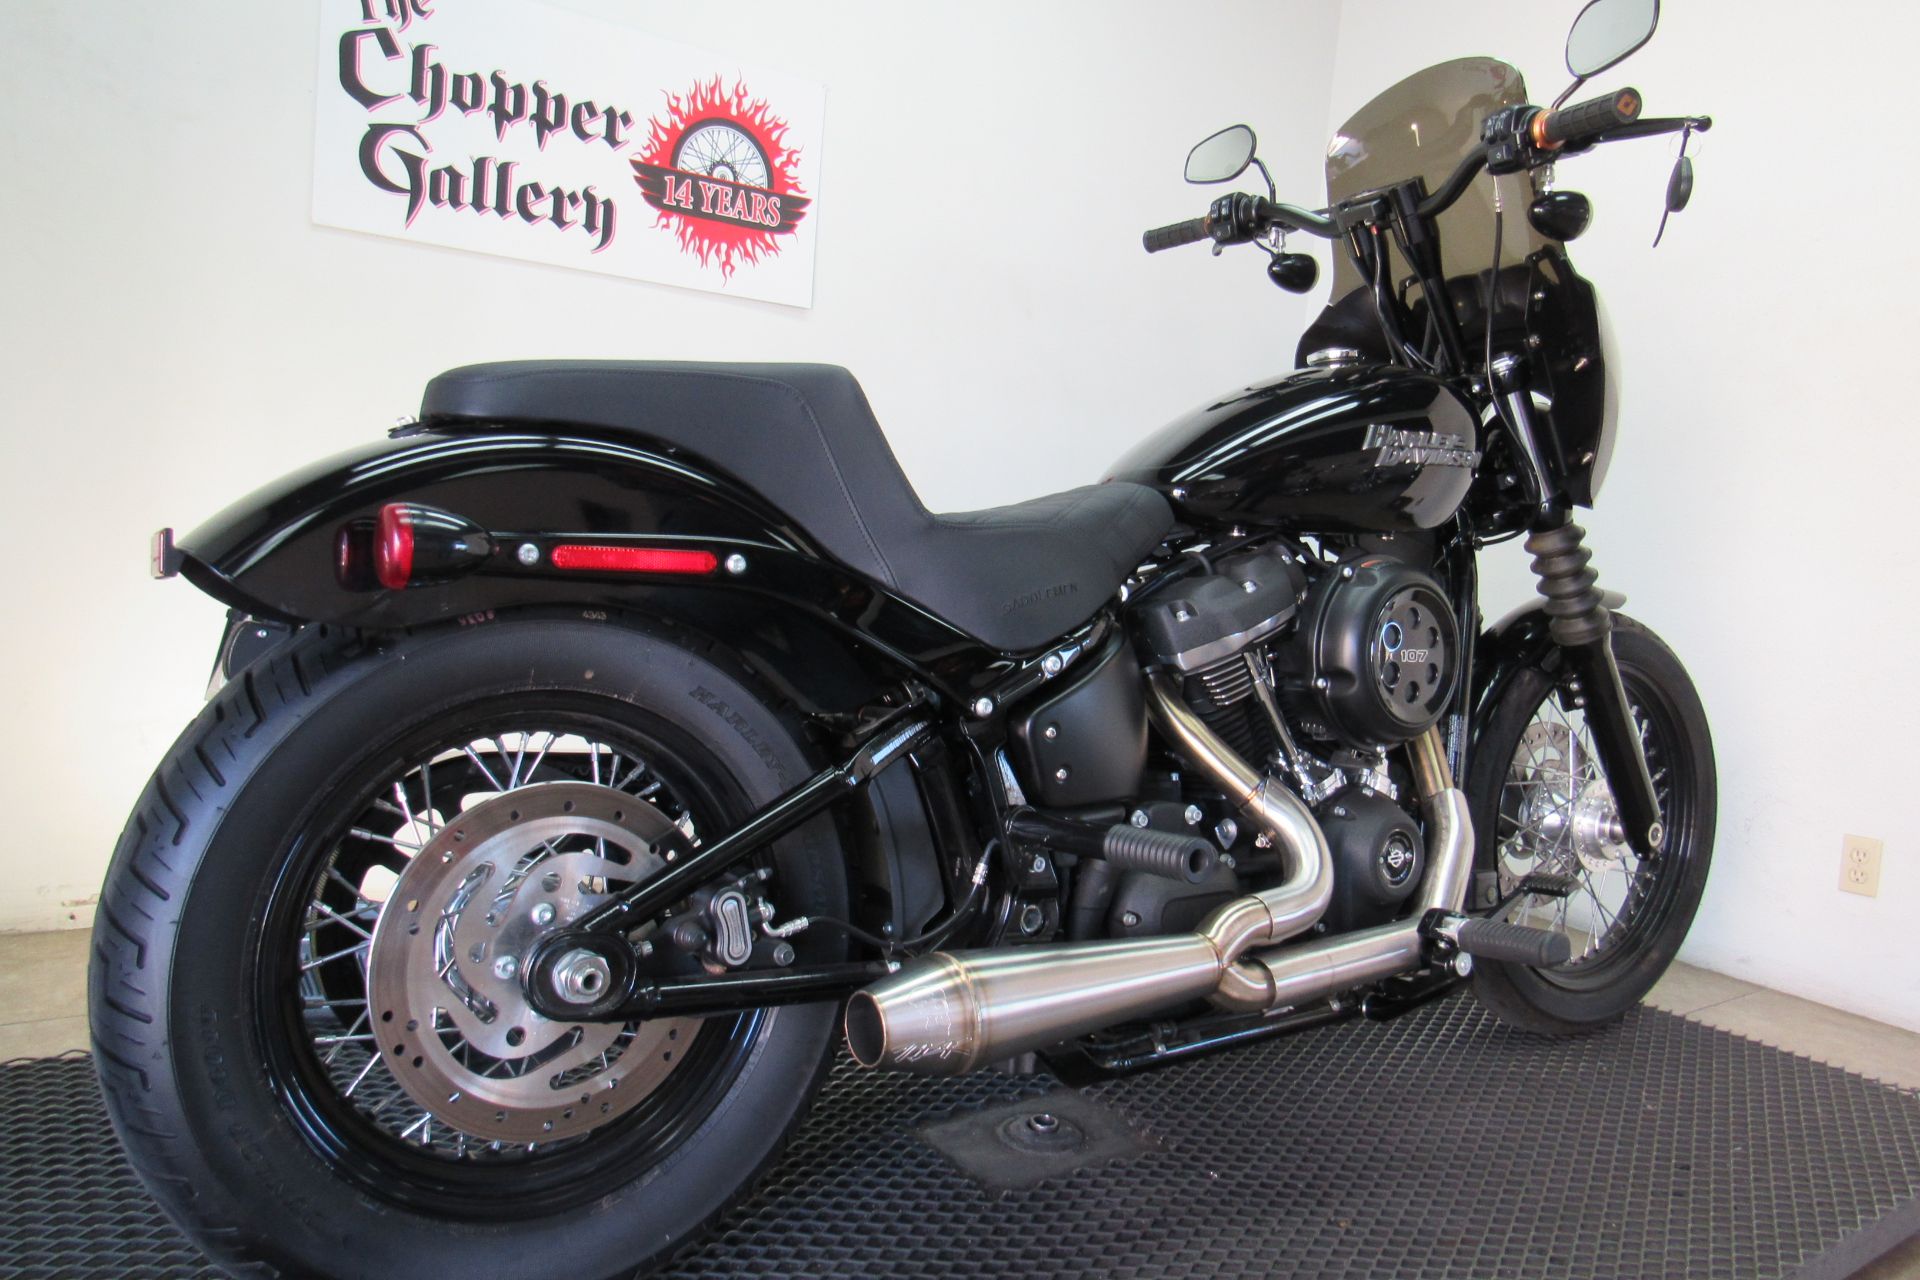 2020 Harley-Davidson Street Bob® in Temecula, California - Photo 23